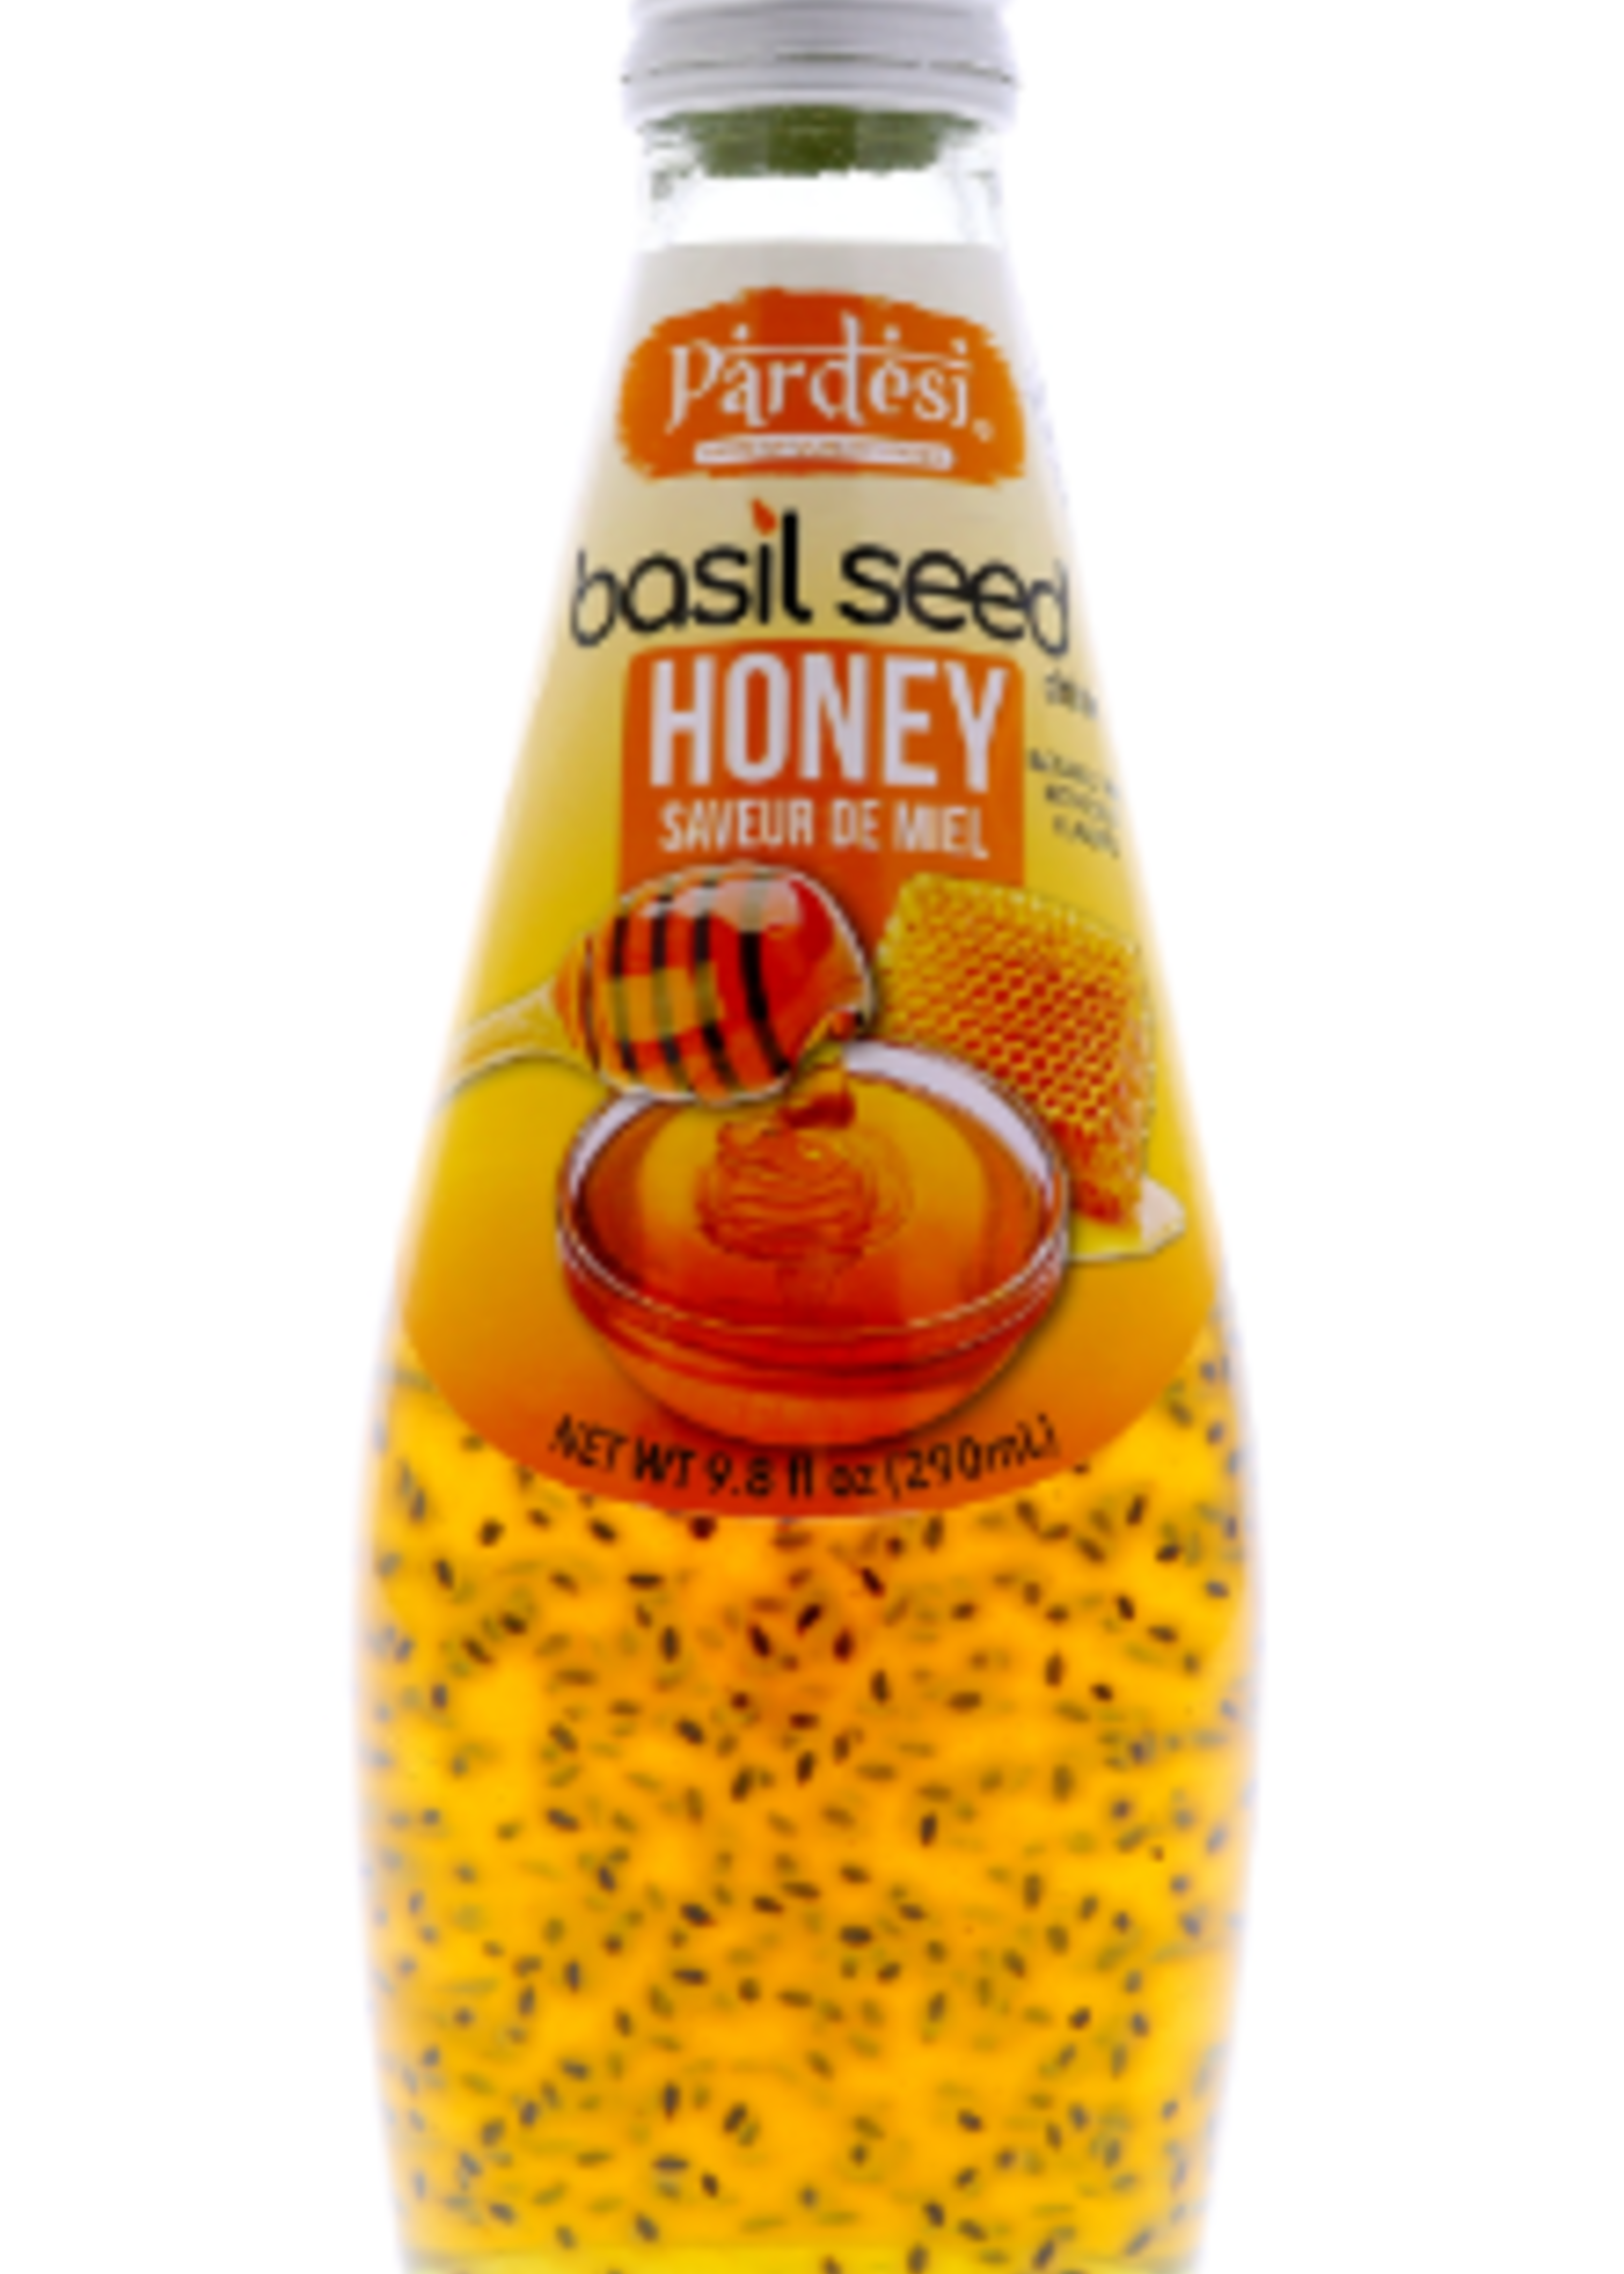 Pardesi Honey Drink with Basilseed 290ml